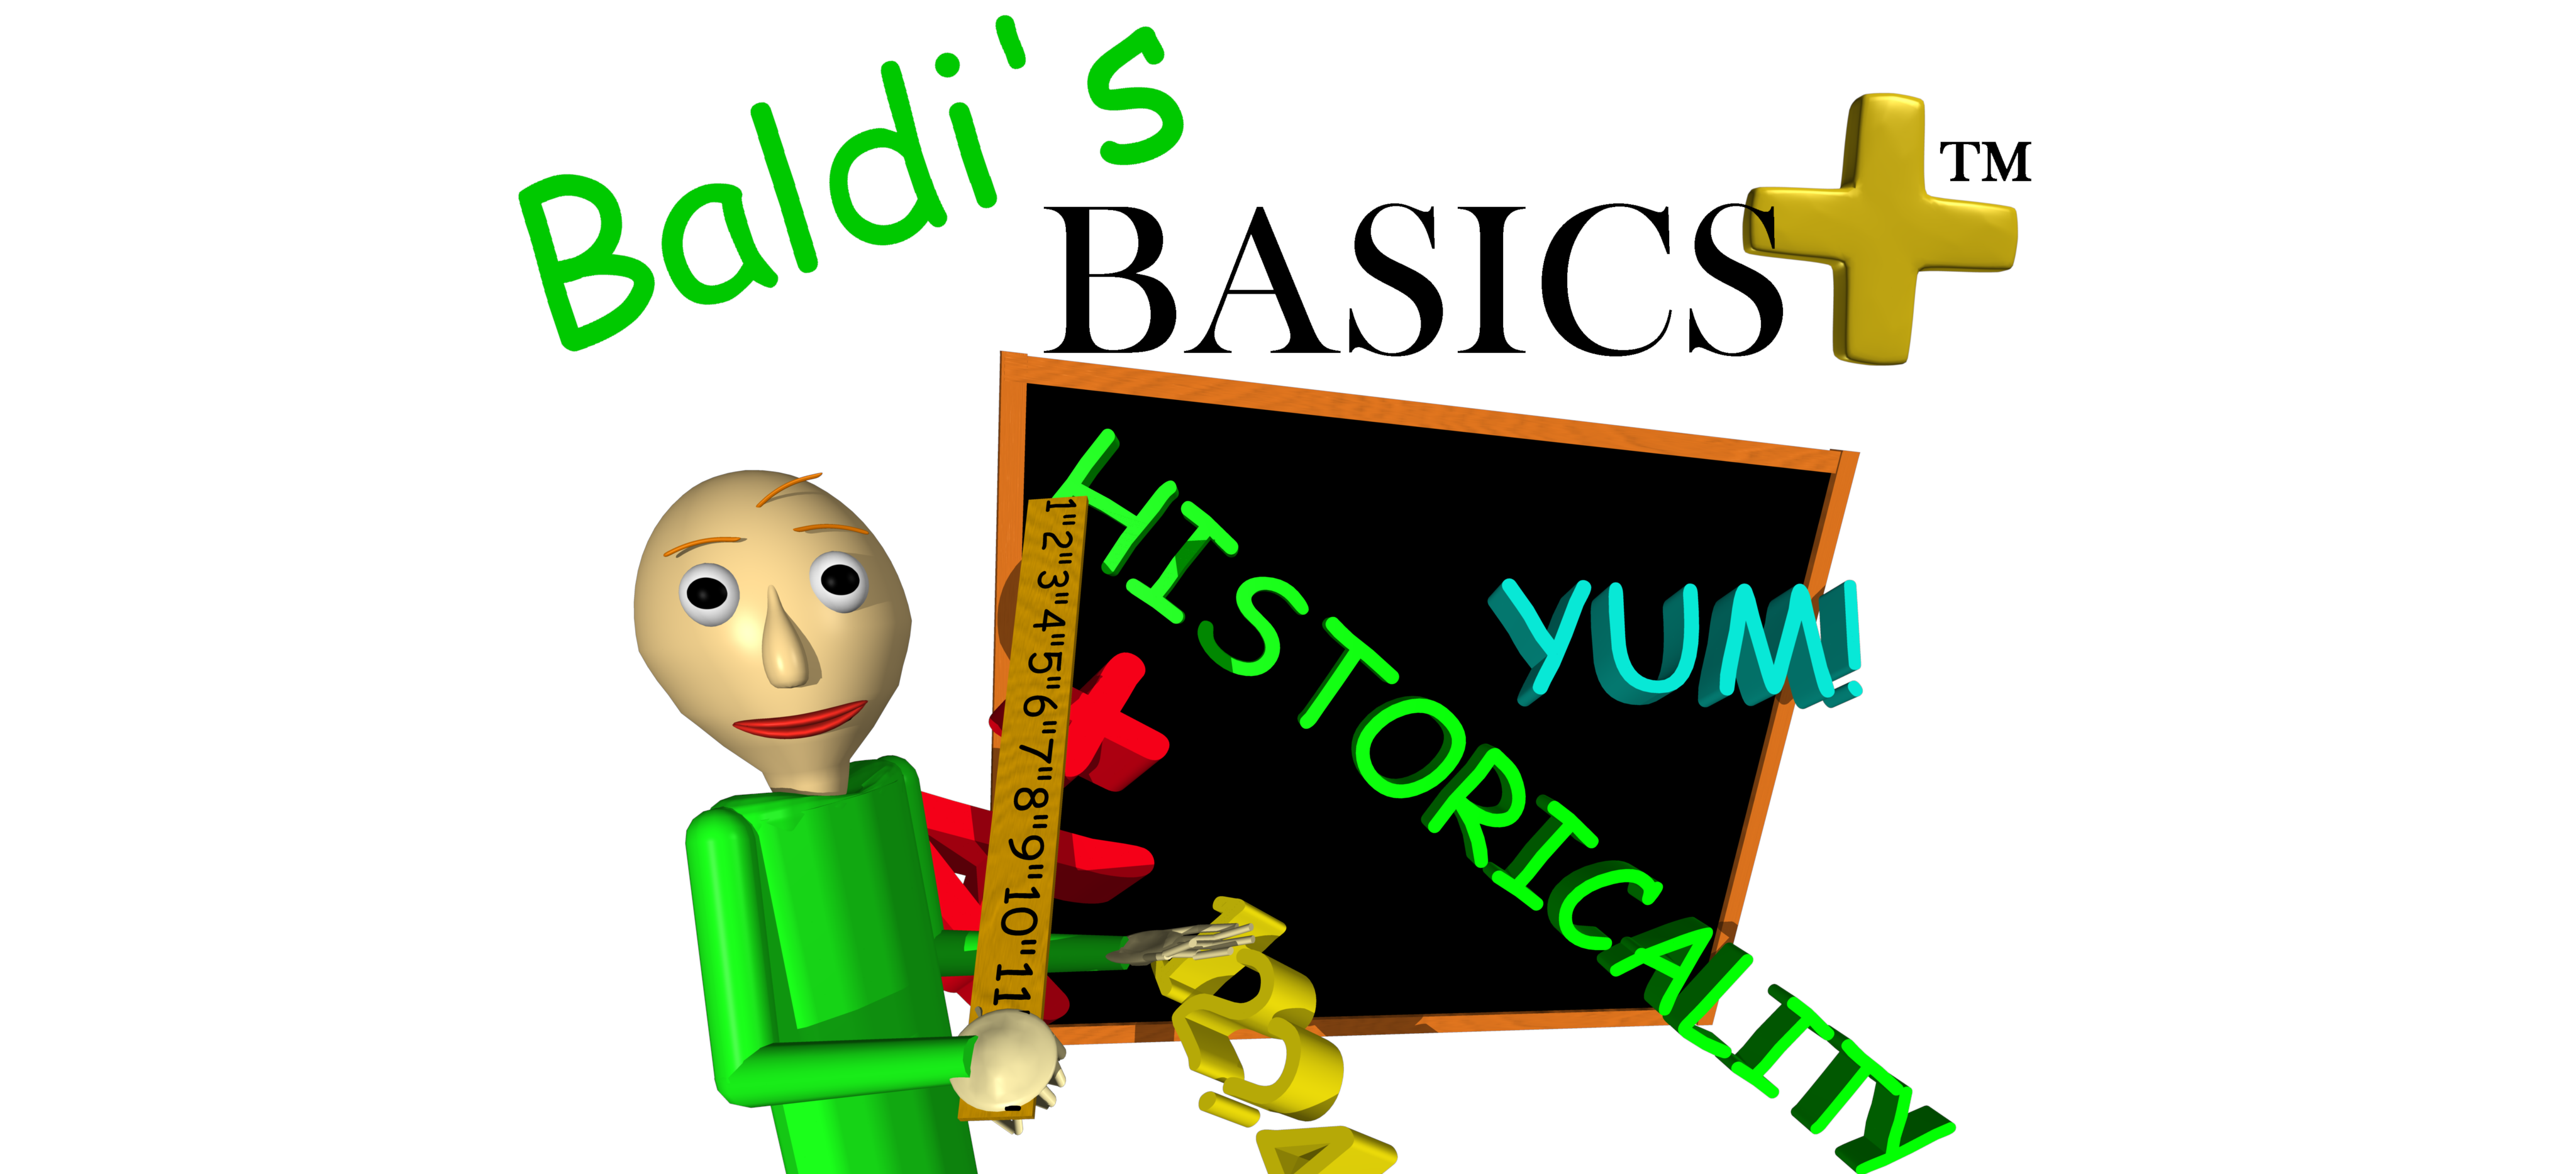 Baldi S Basics Plus By Basically Games